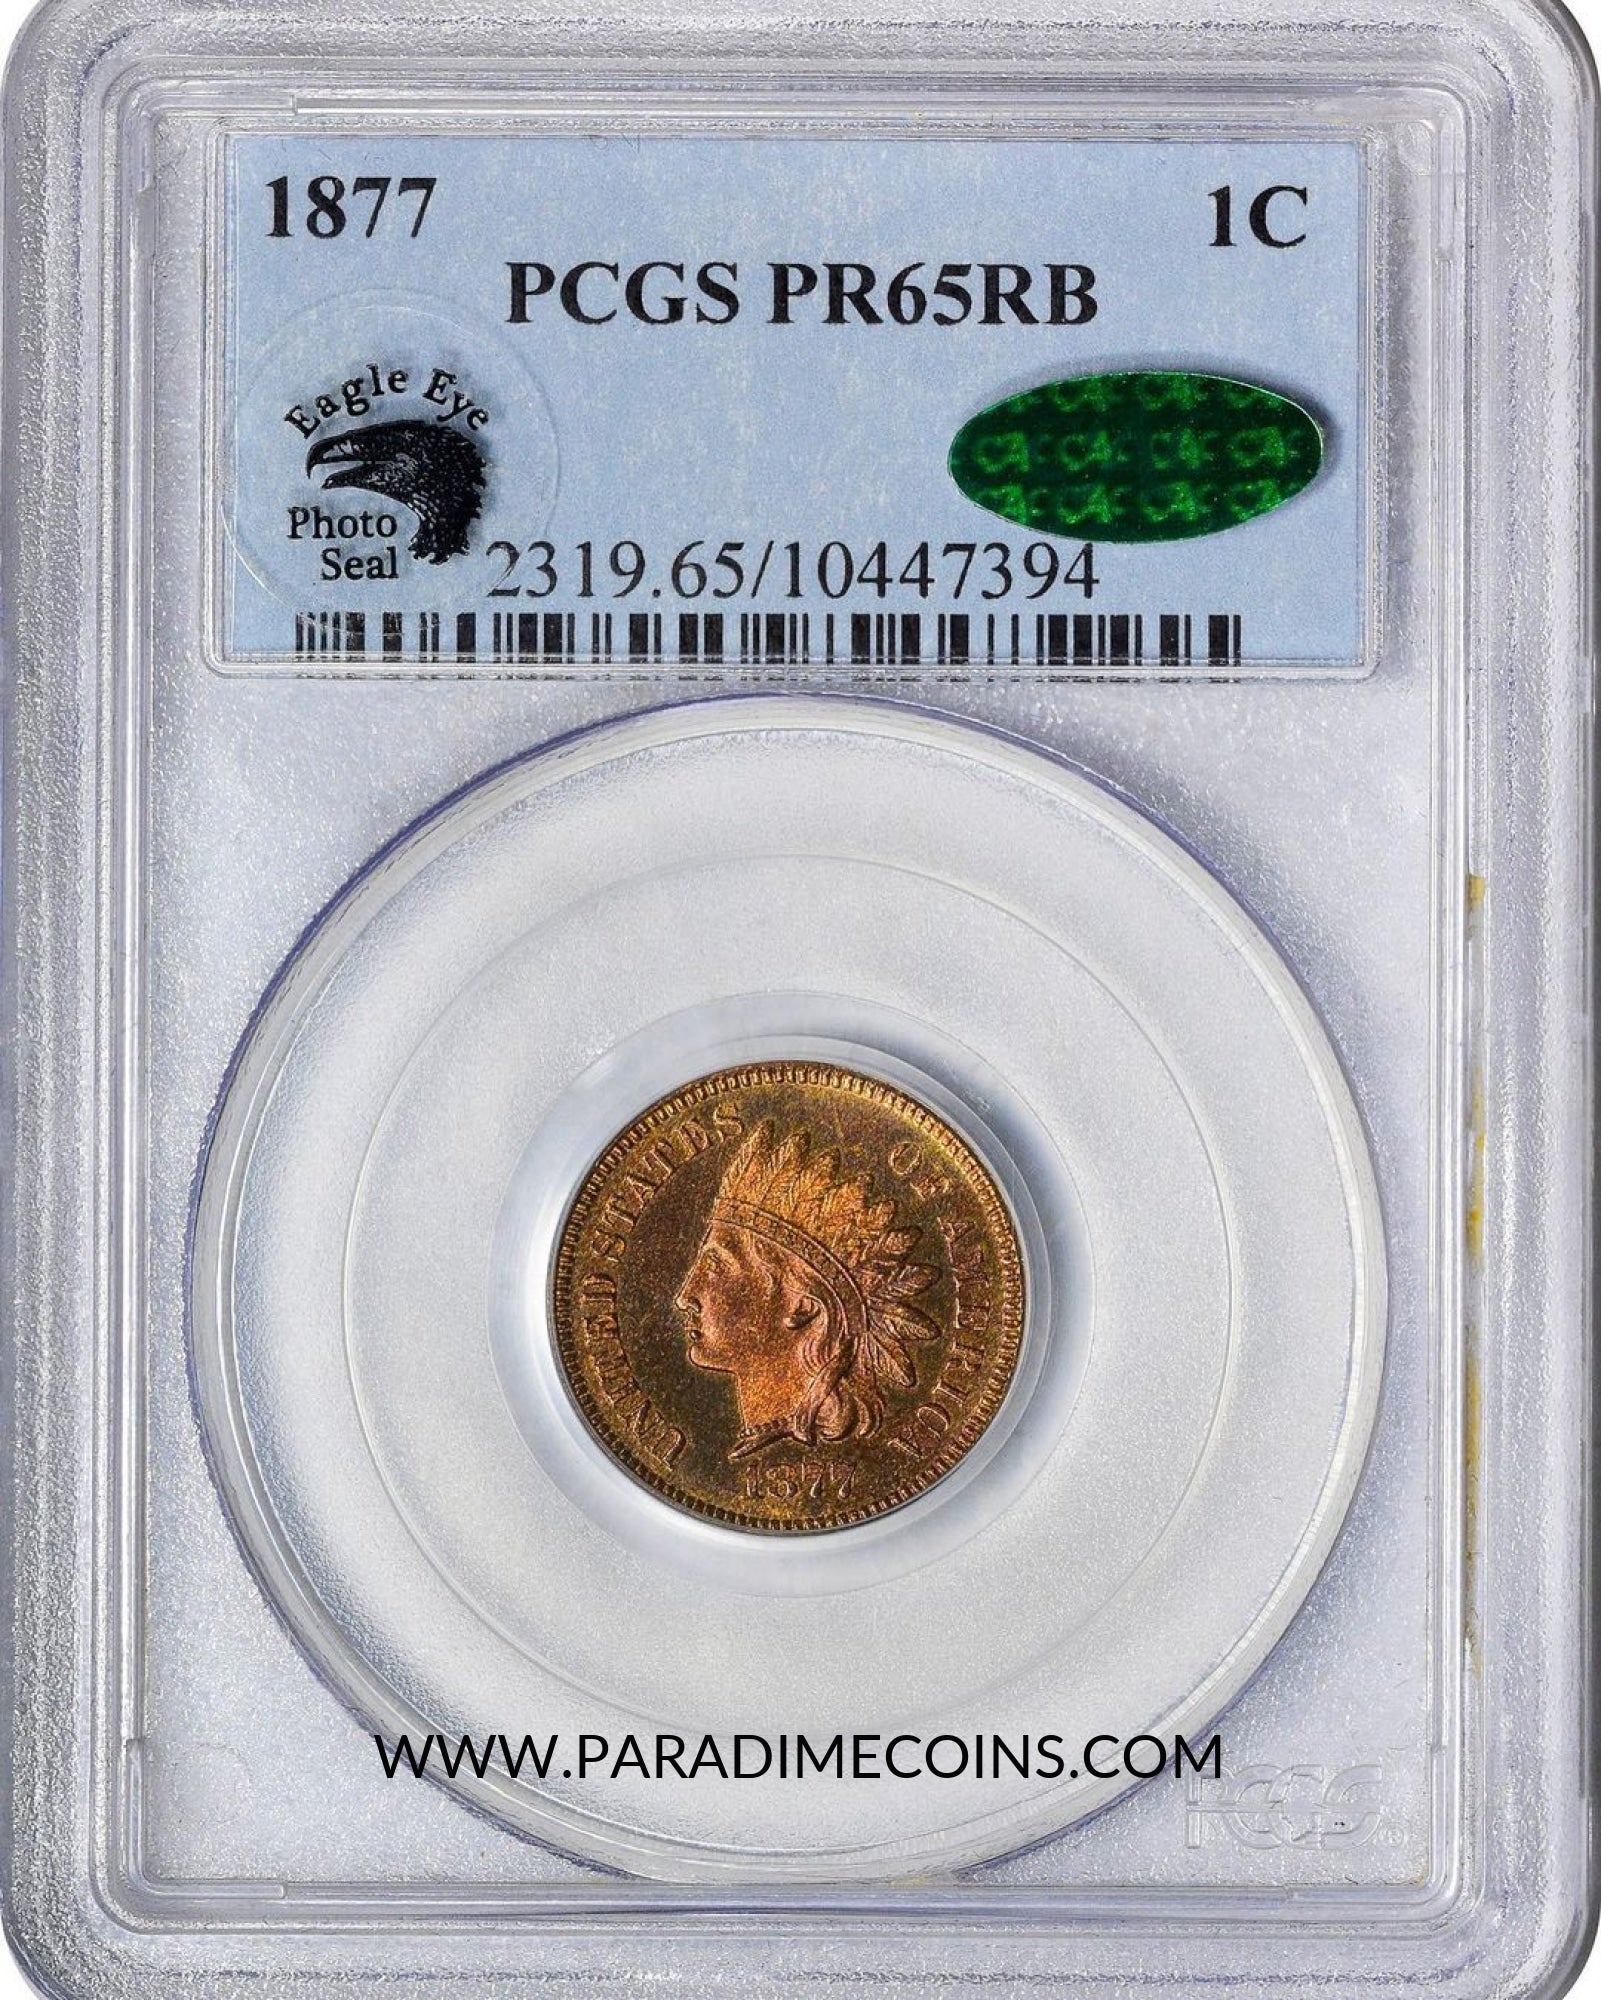 1877 1C PR65 RB PCGS CAC EEPS - Paradime Coins | PCGS NGC CACG CAC Rare US Numismatic Coins For Sale